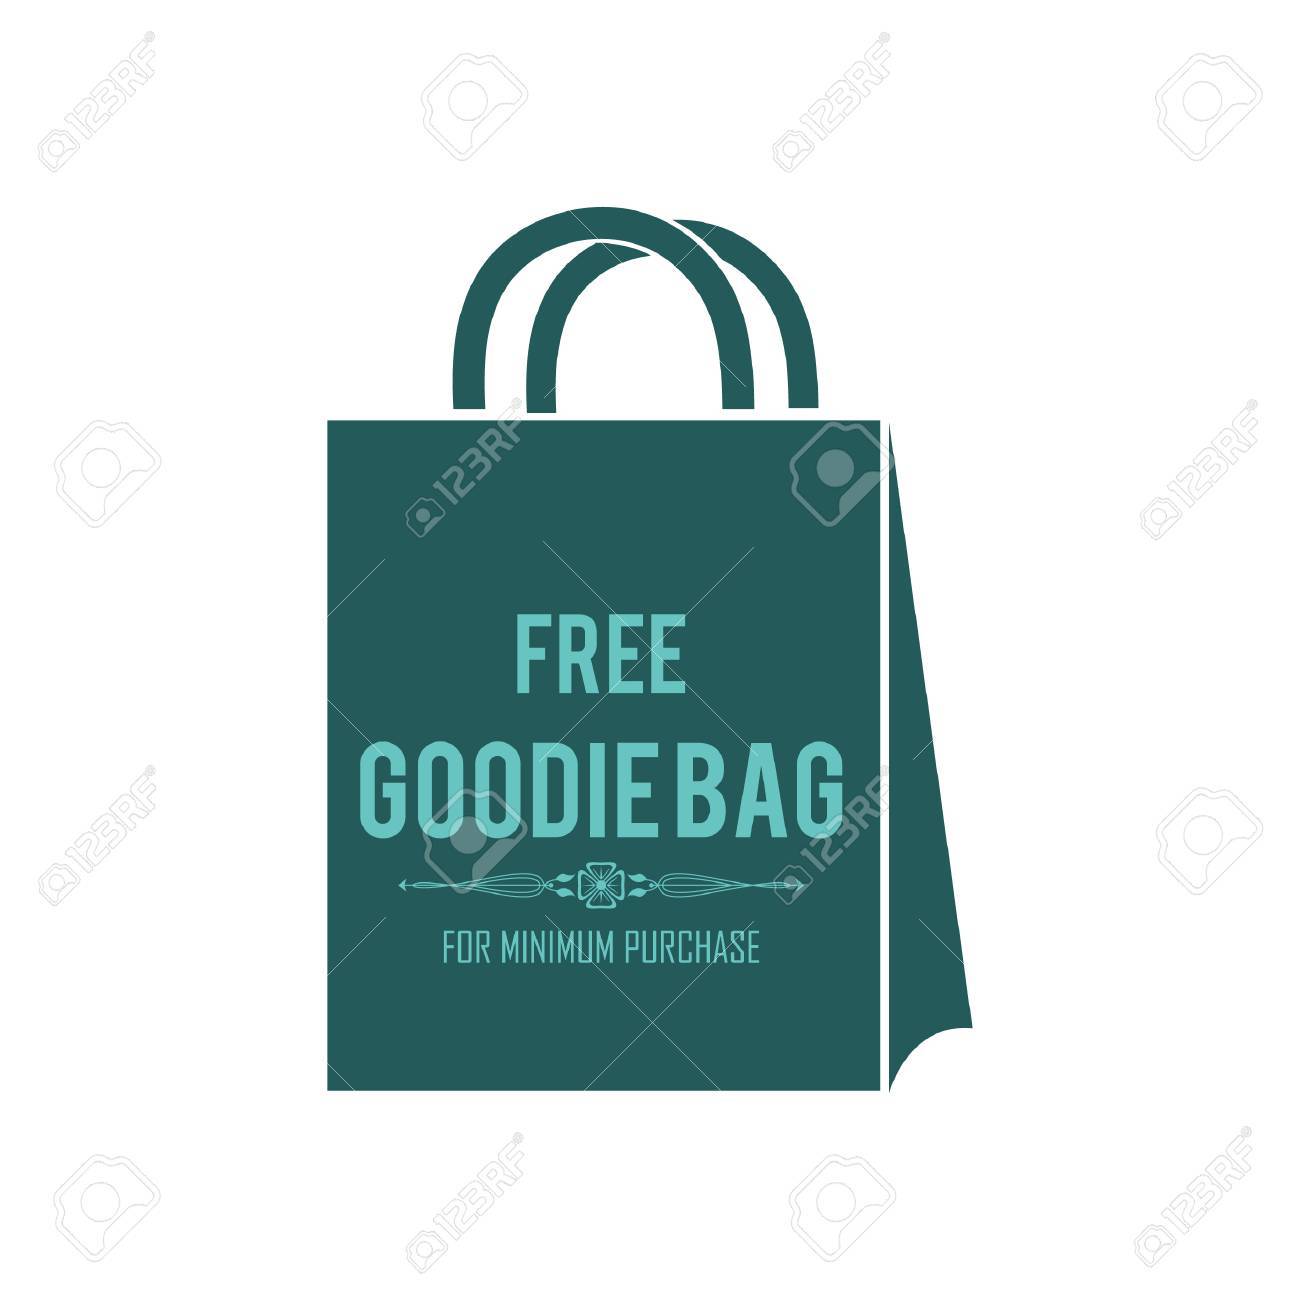 free goodie bag label.